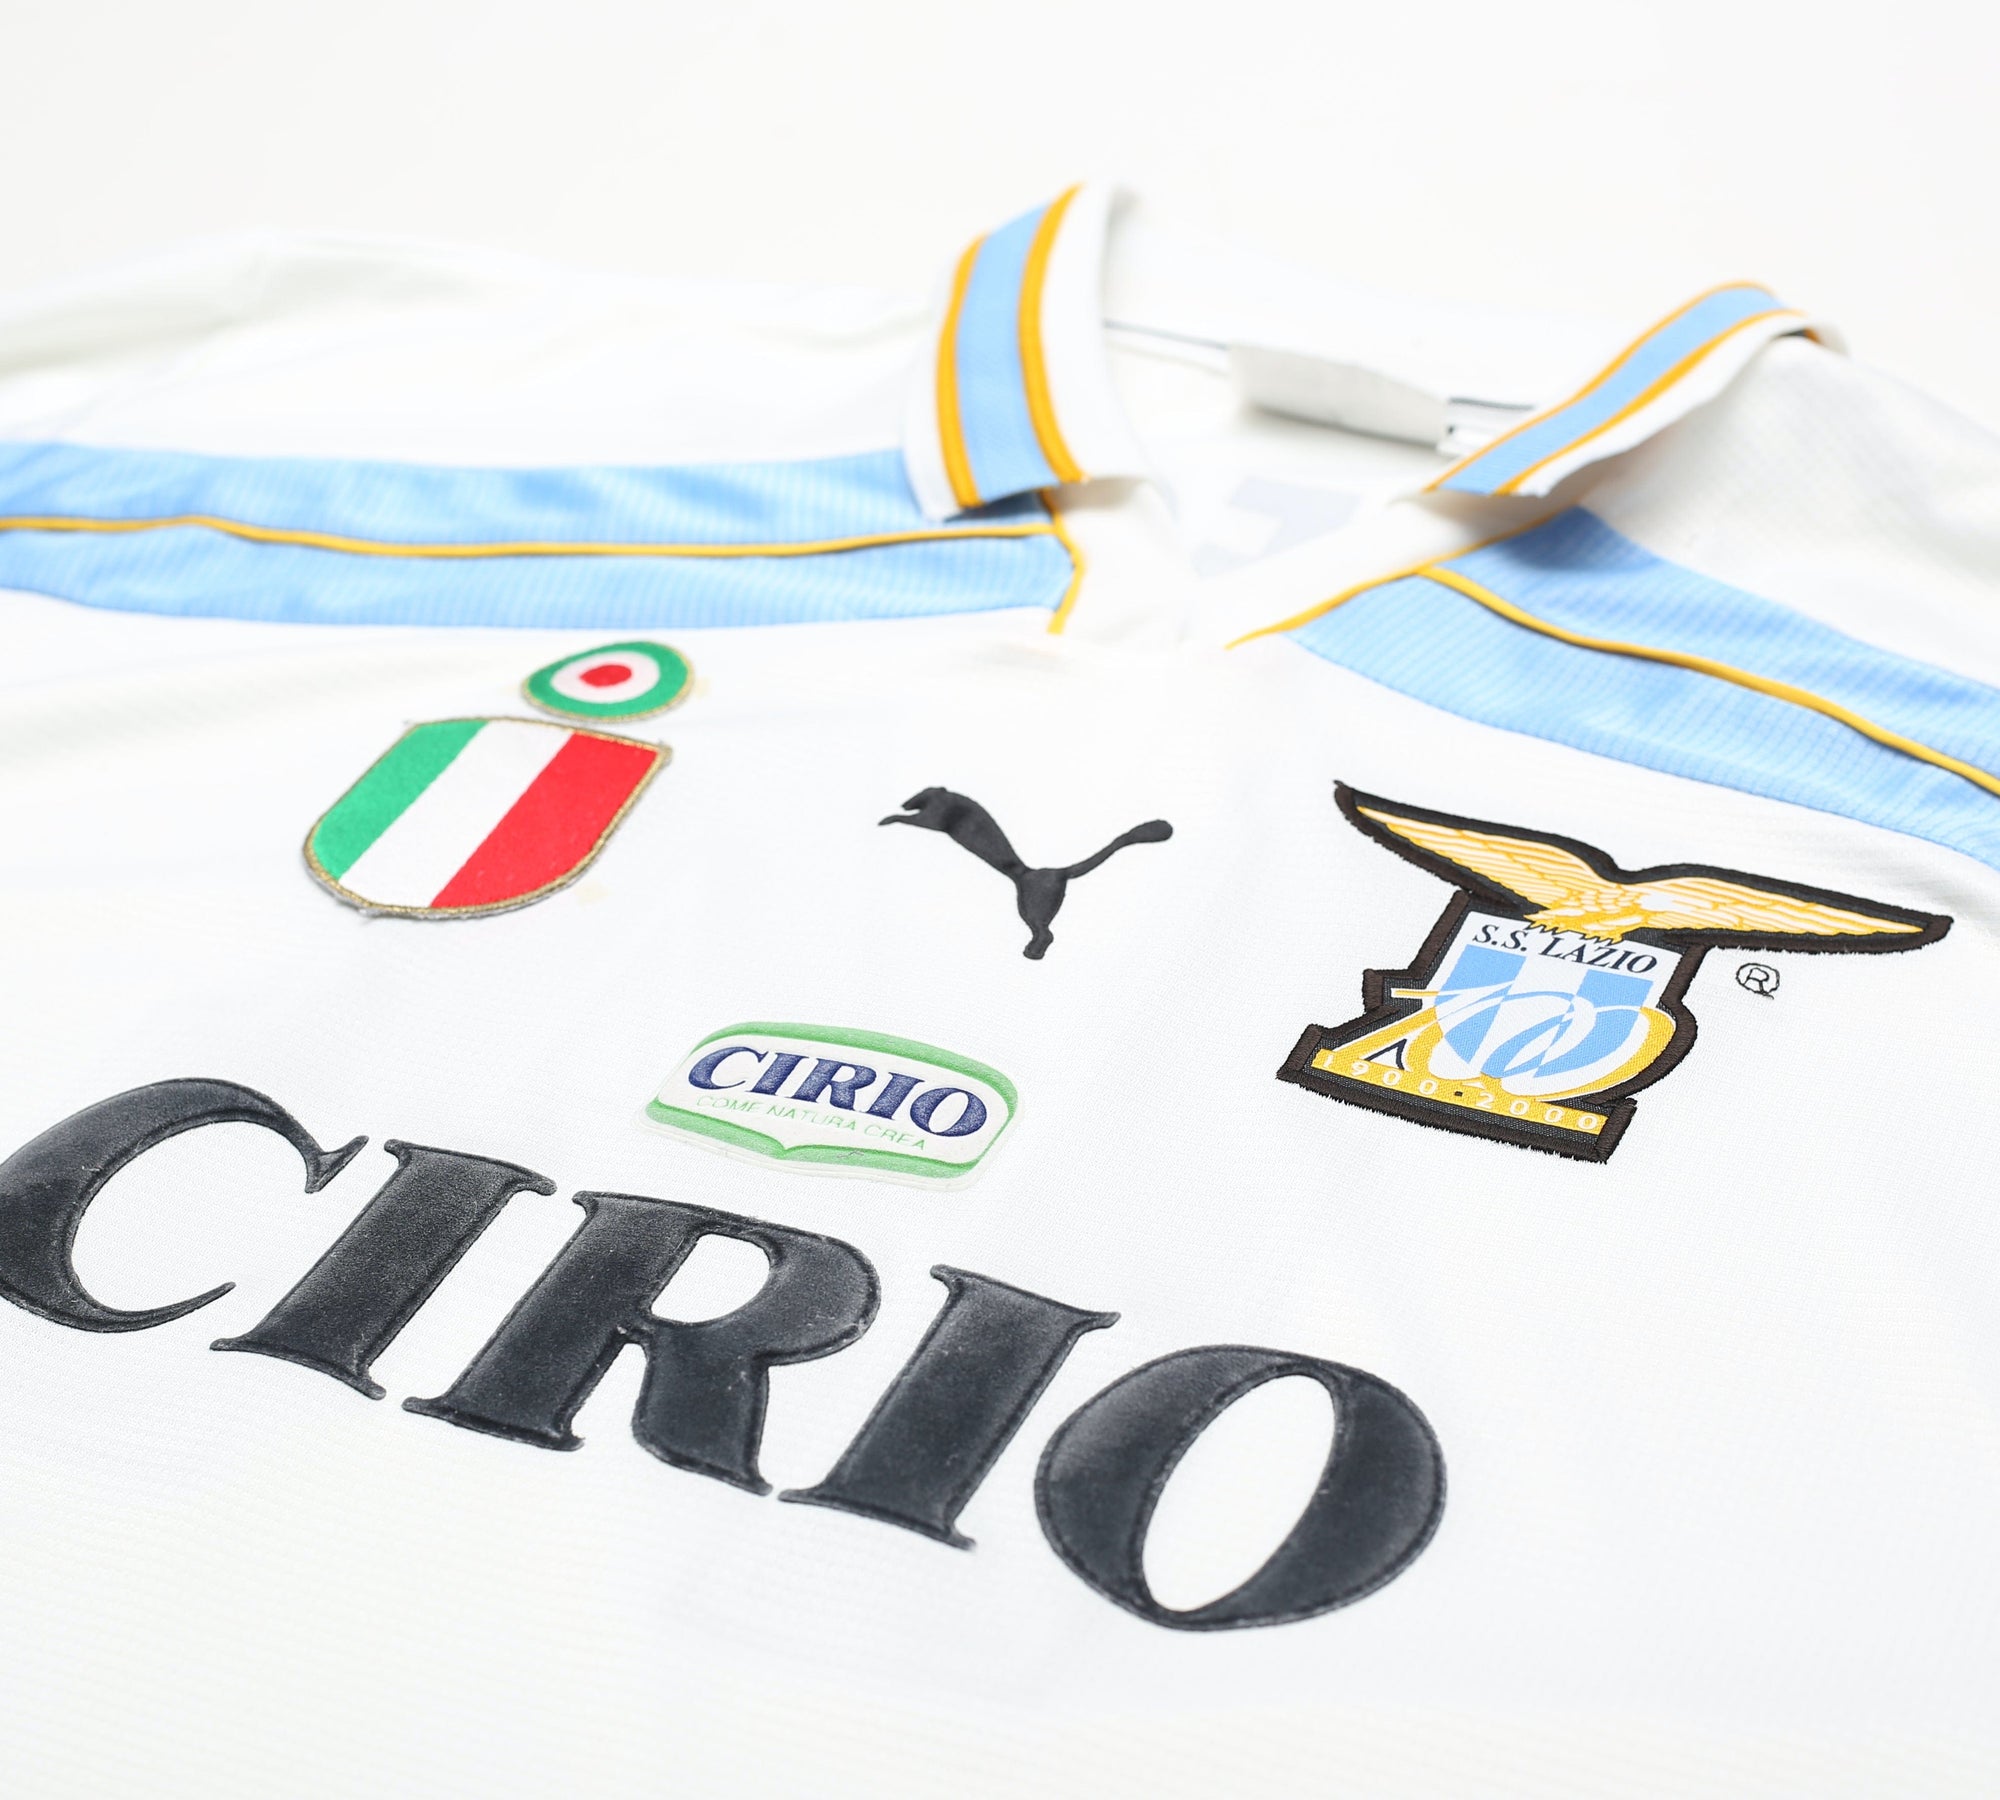 1999/00 SIMEONE #14 Lazio Vintage PUMA Centenary Home Football Shirt (L)